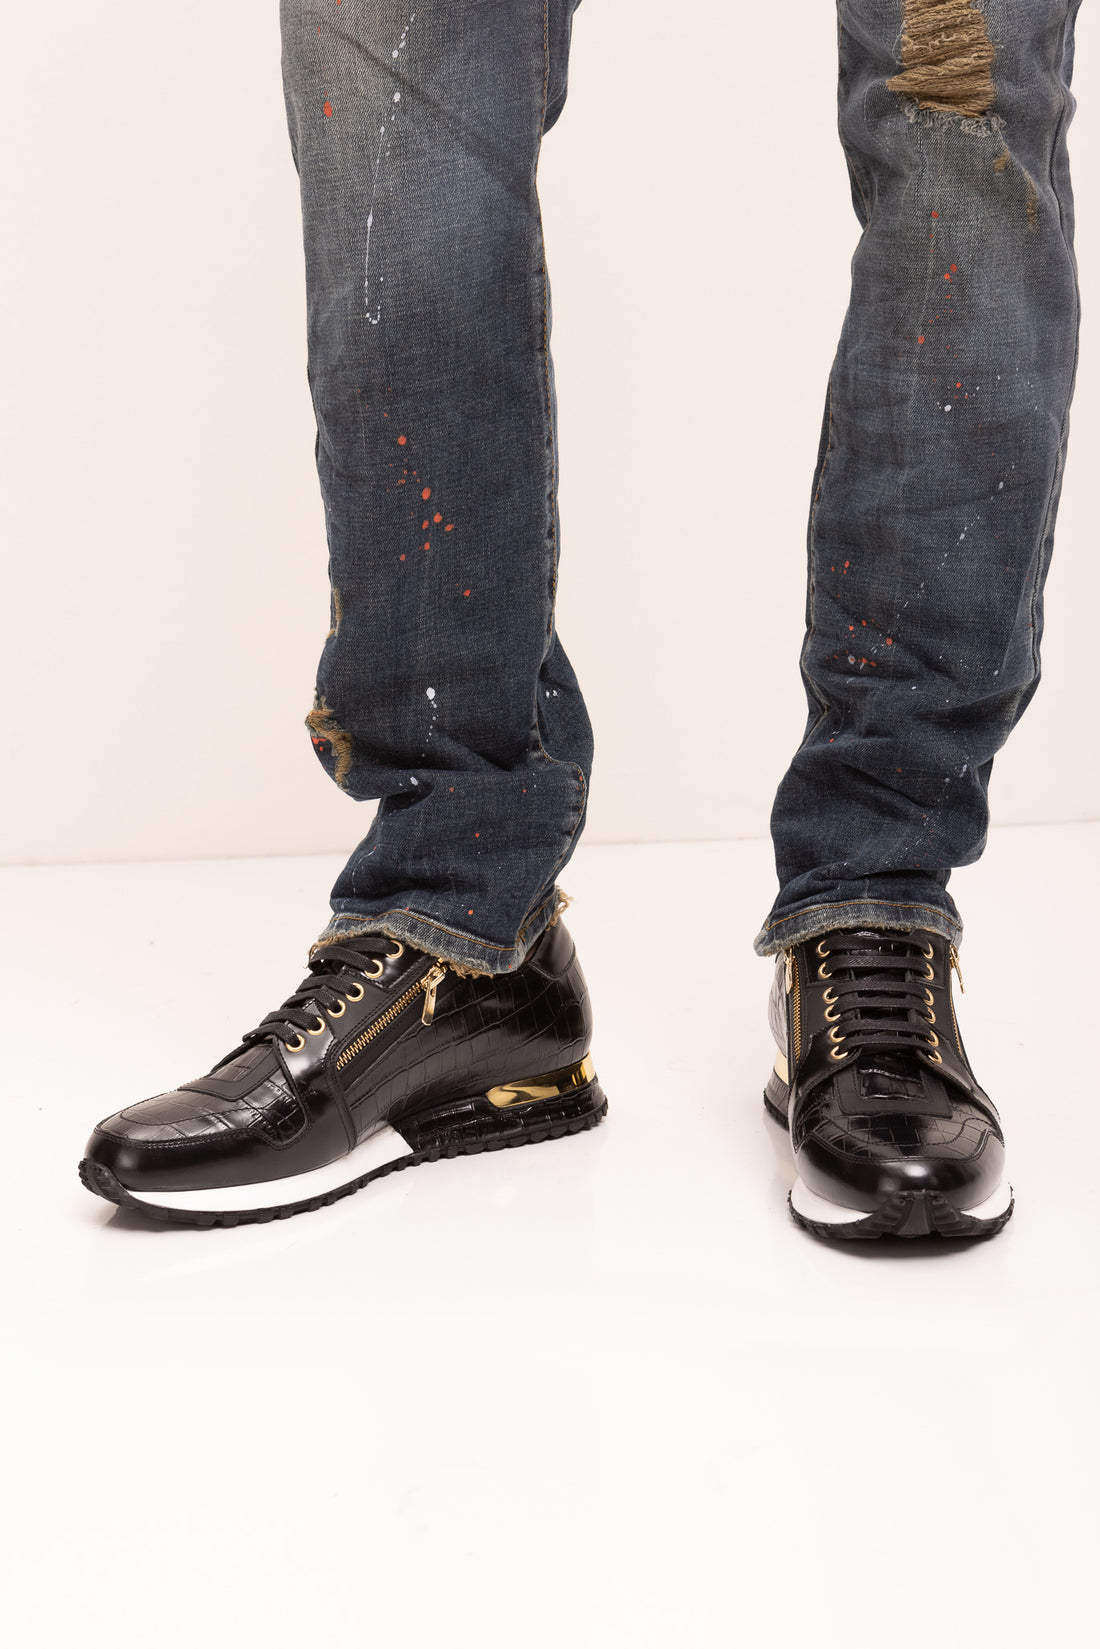 New FOOTWEAR - D-0521 BLACK CROC - Ron Tomson